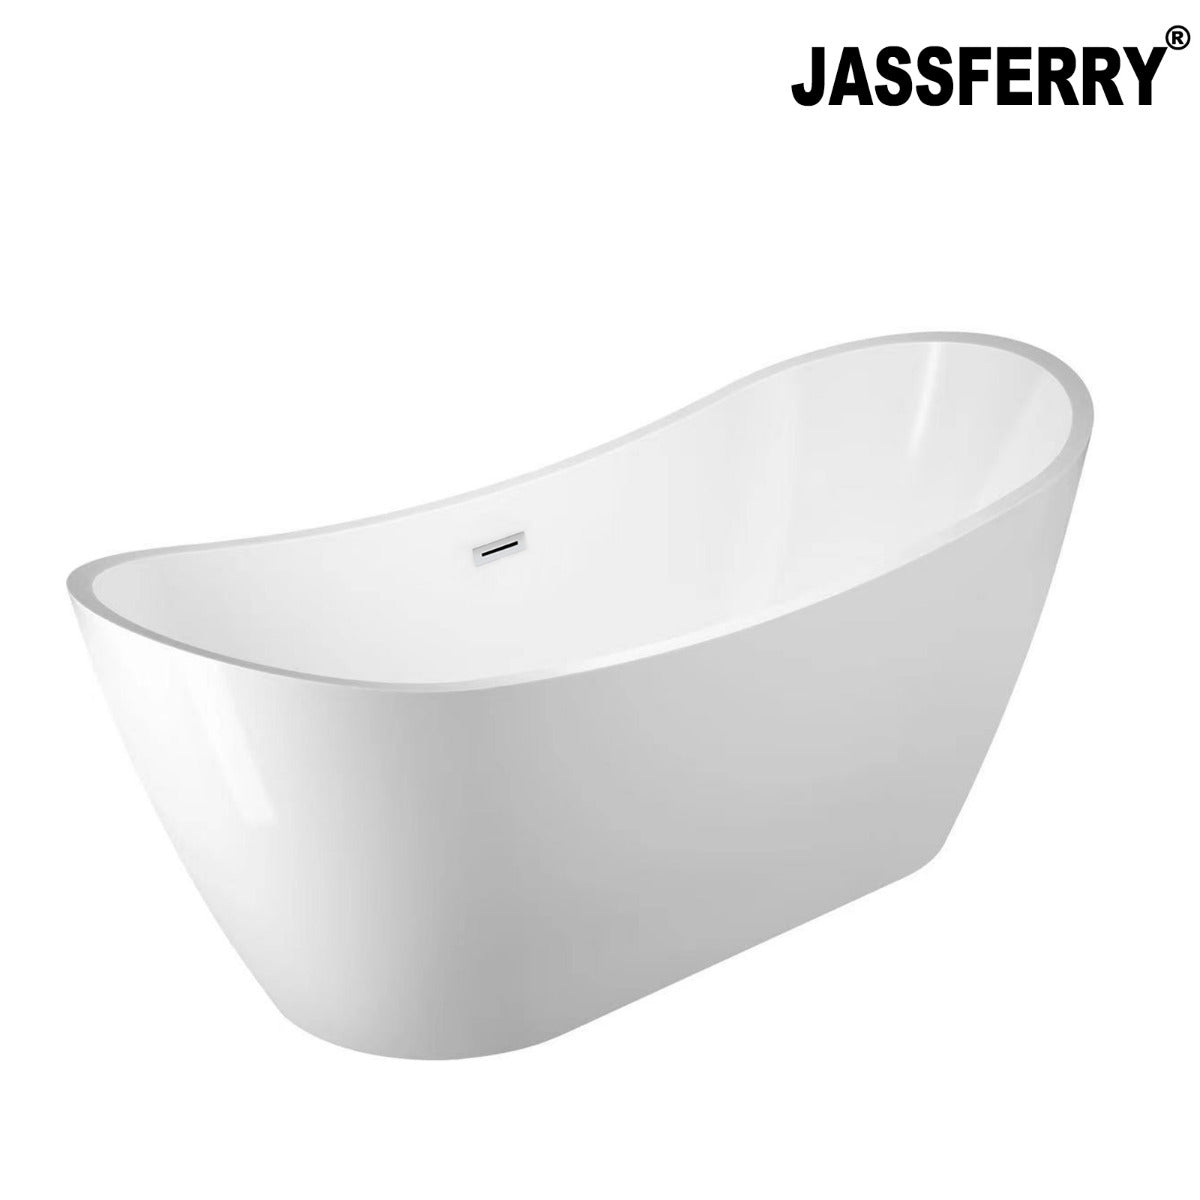 JassferryJASSFERRY Modern Design Freestanding Bathtub Luxury Soaking Baths White AcrylicBathtubs